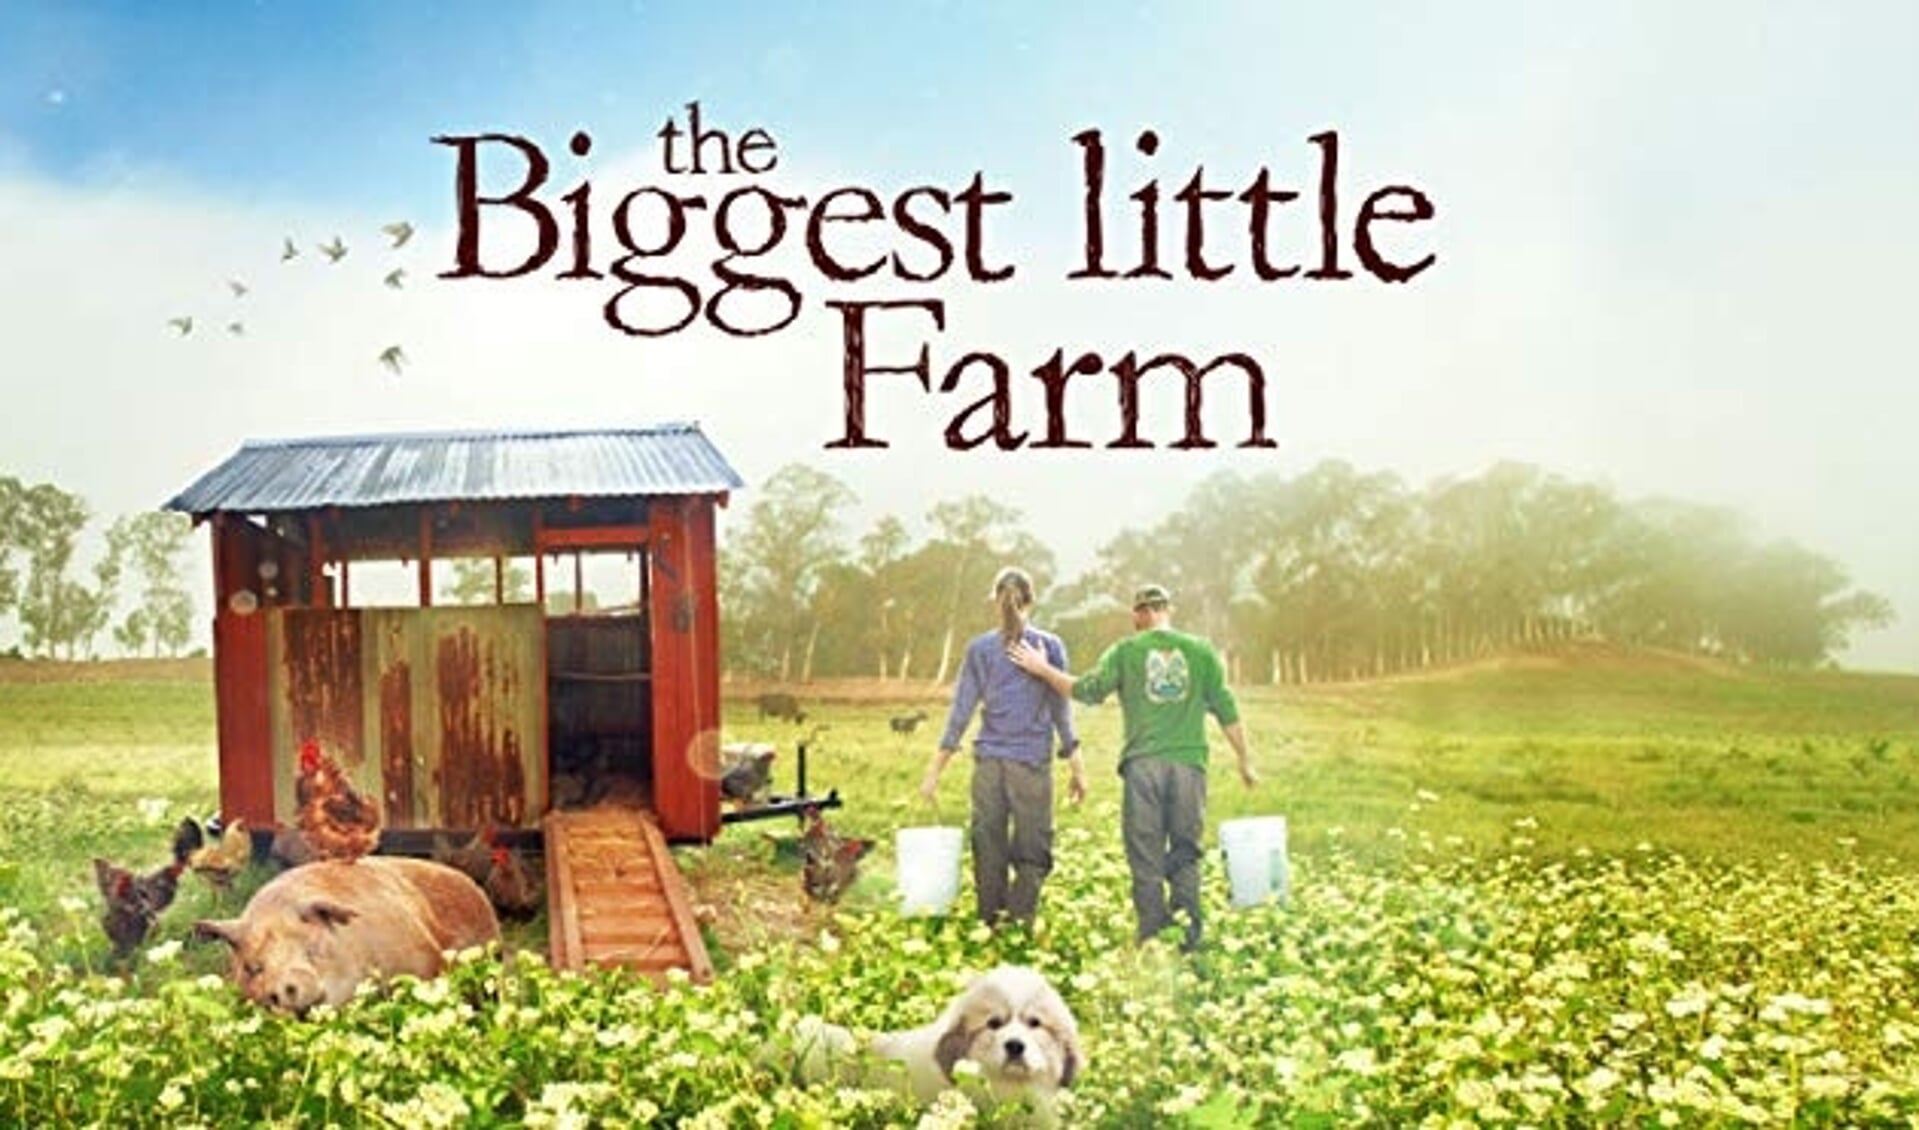 The Biggest Little Farm.